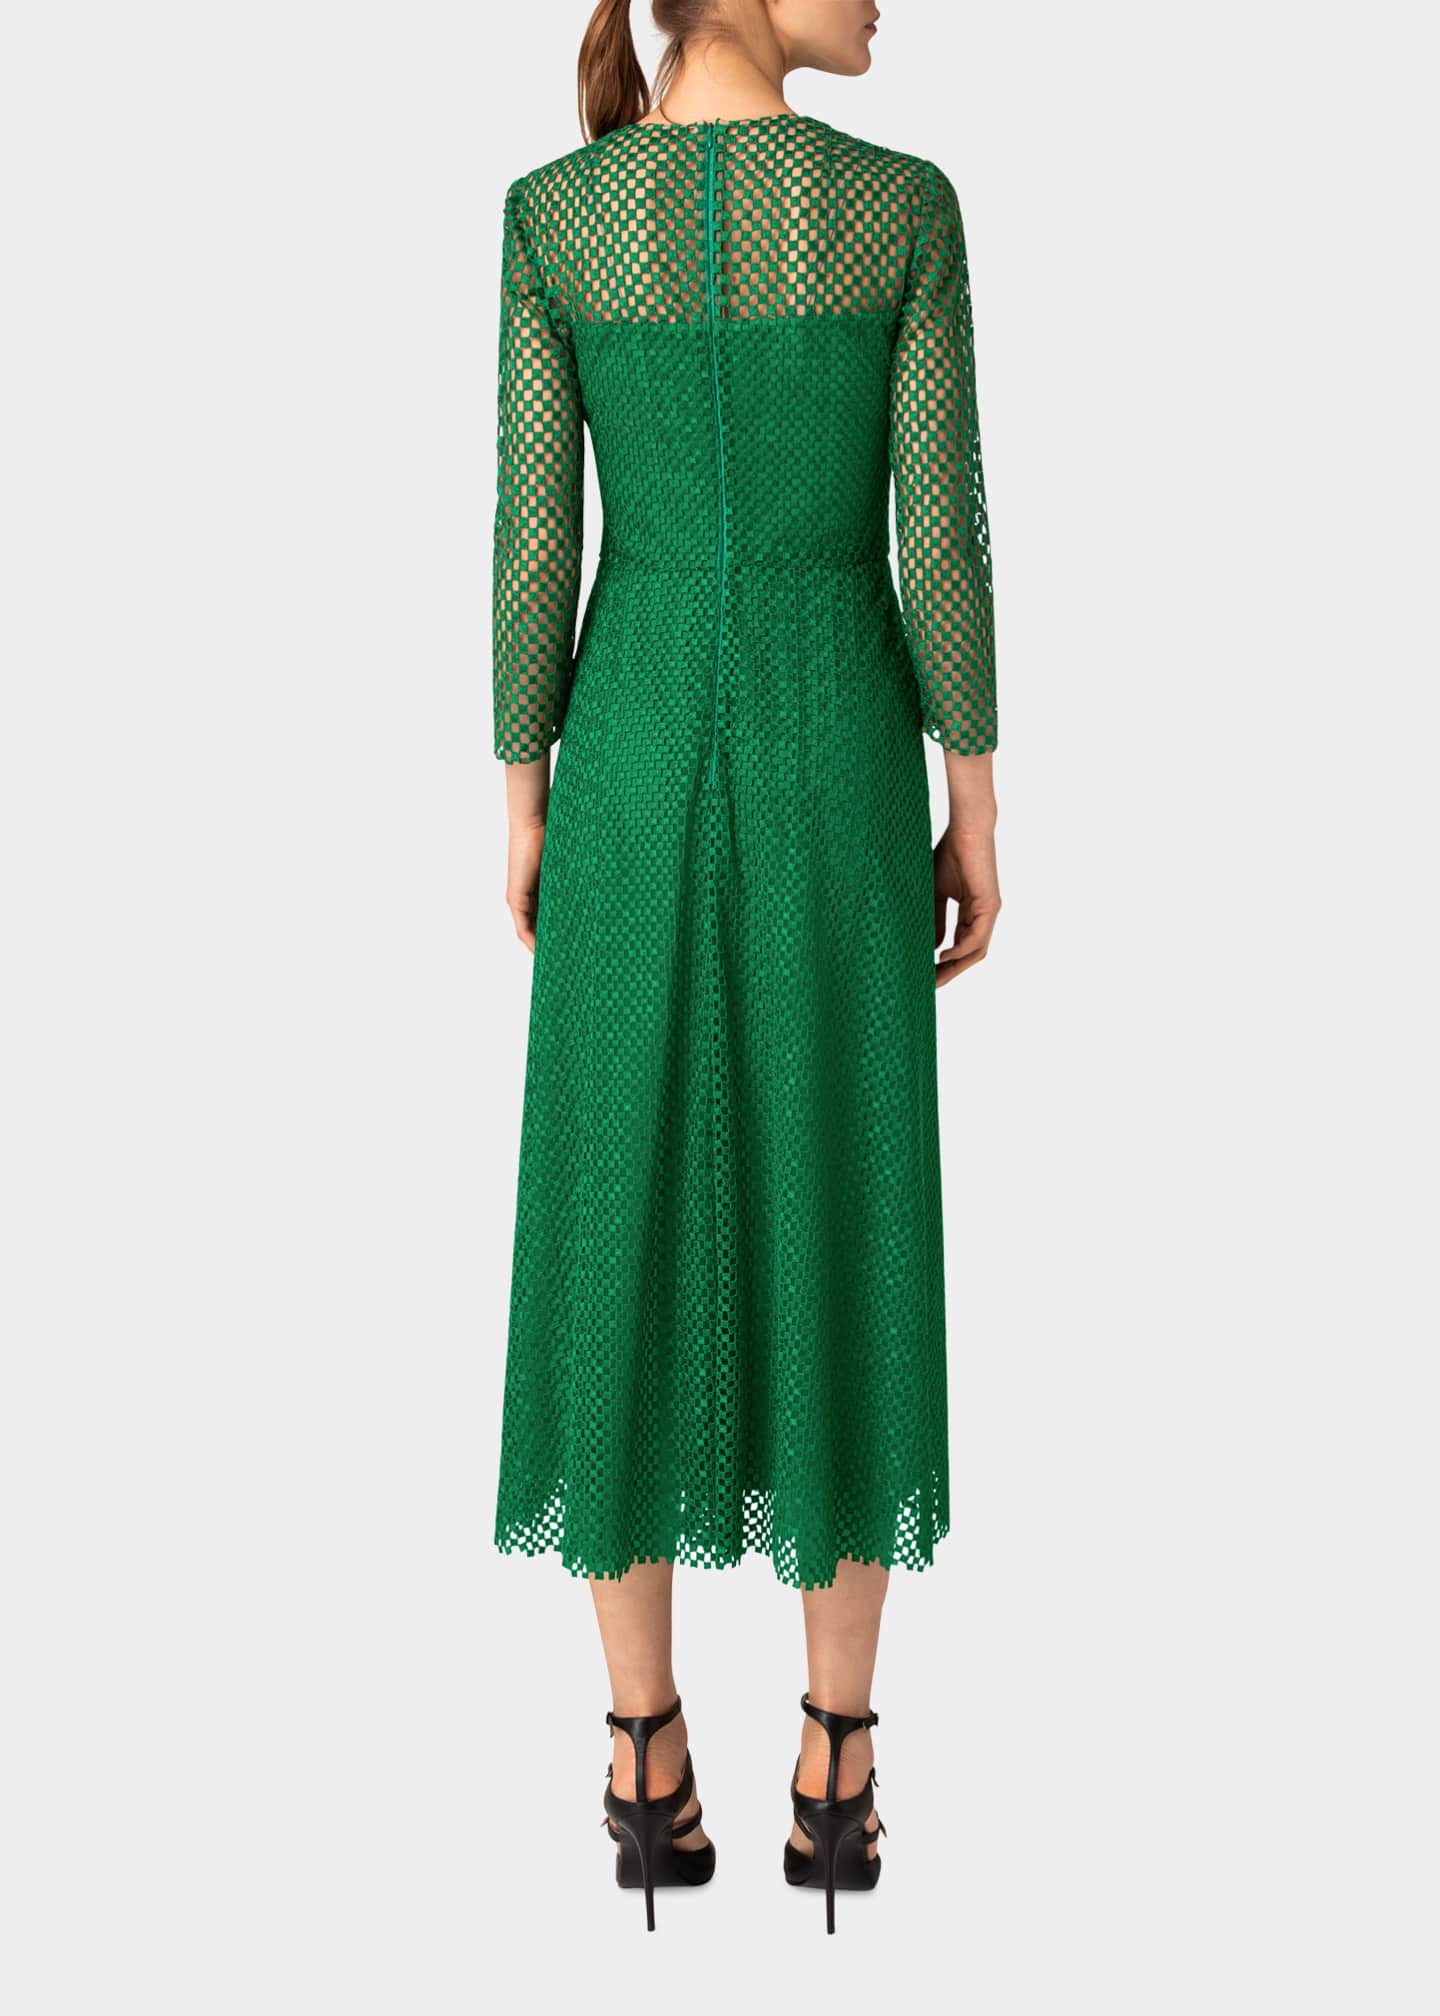 Akris Infinite-Embroidered Midi Dress, Green - Bergdorf Goodman